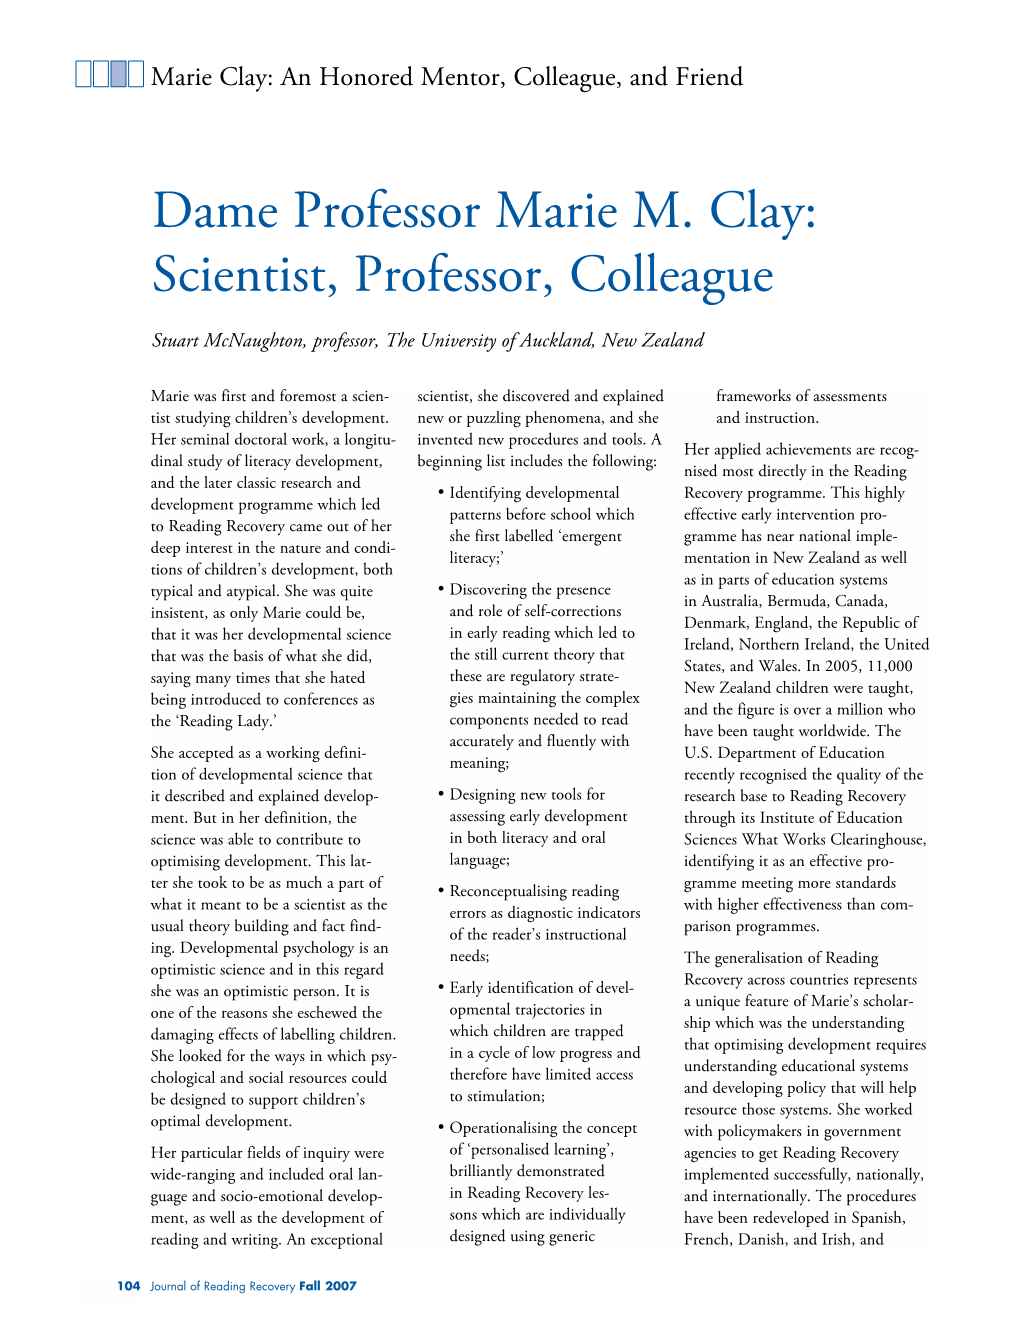 Dame Professor Marie M. Clay: Scientist, Professor, Colleague